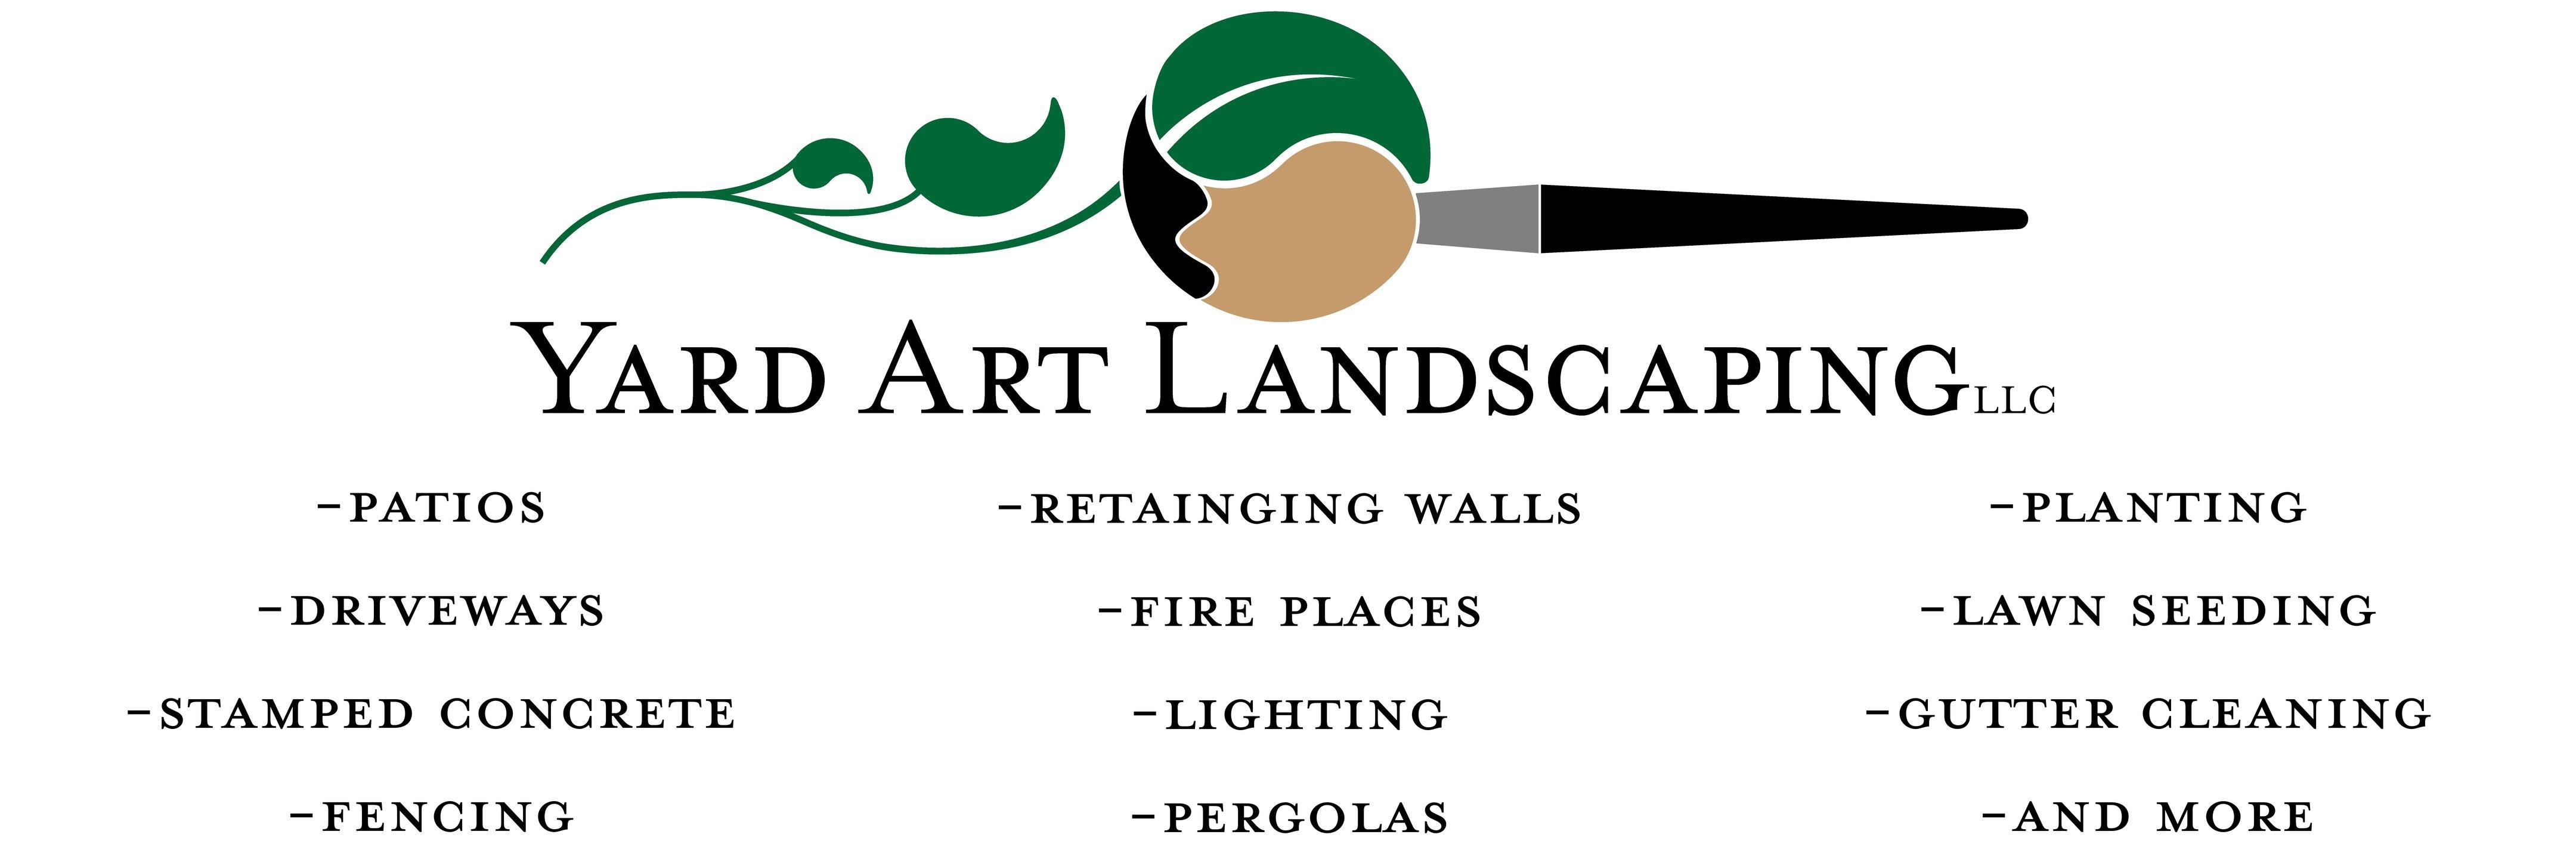 Yard Art Landscaping LLC's Services